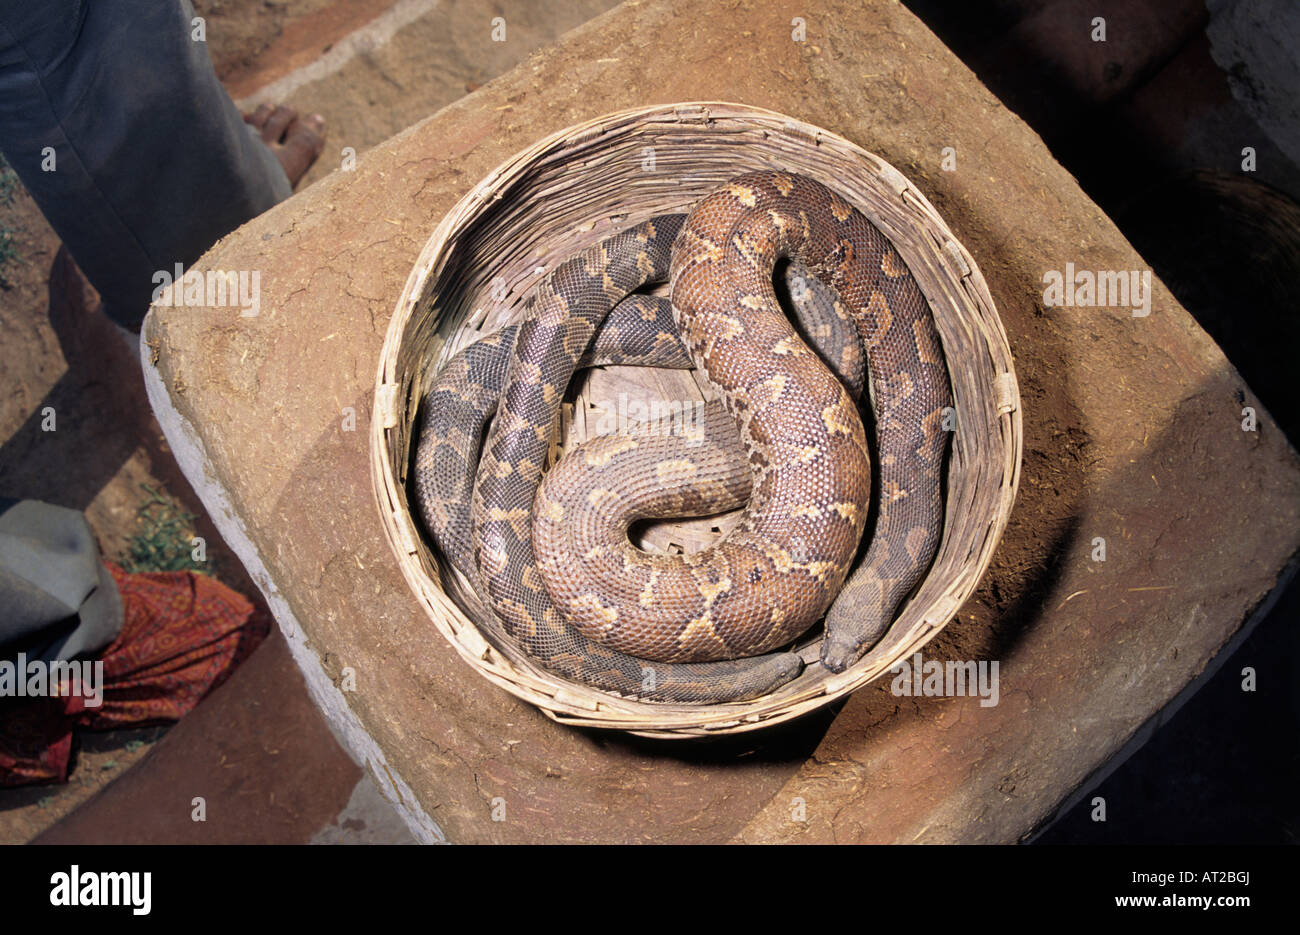 COMMON SAND BOA. Gongylophis conicus Non venomous. Kept in basket for display by Kalbeliya Snake Charmers Madhya Pradesh, India Stock Photo